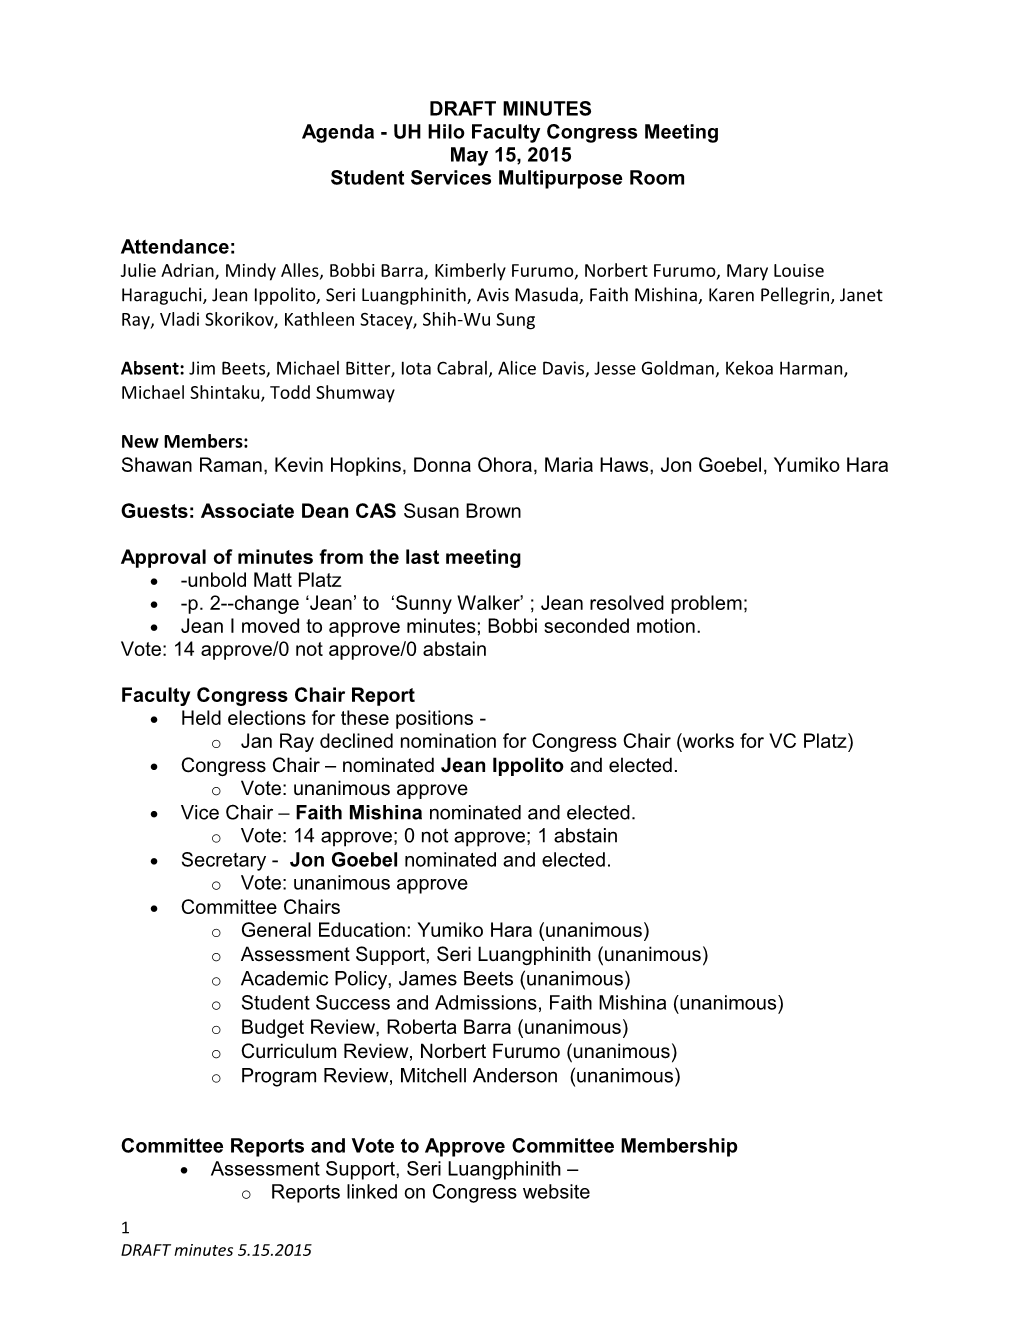 Agenda - UH Hilo Faculty Congress Meeting s1